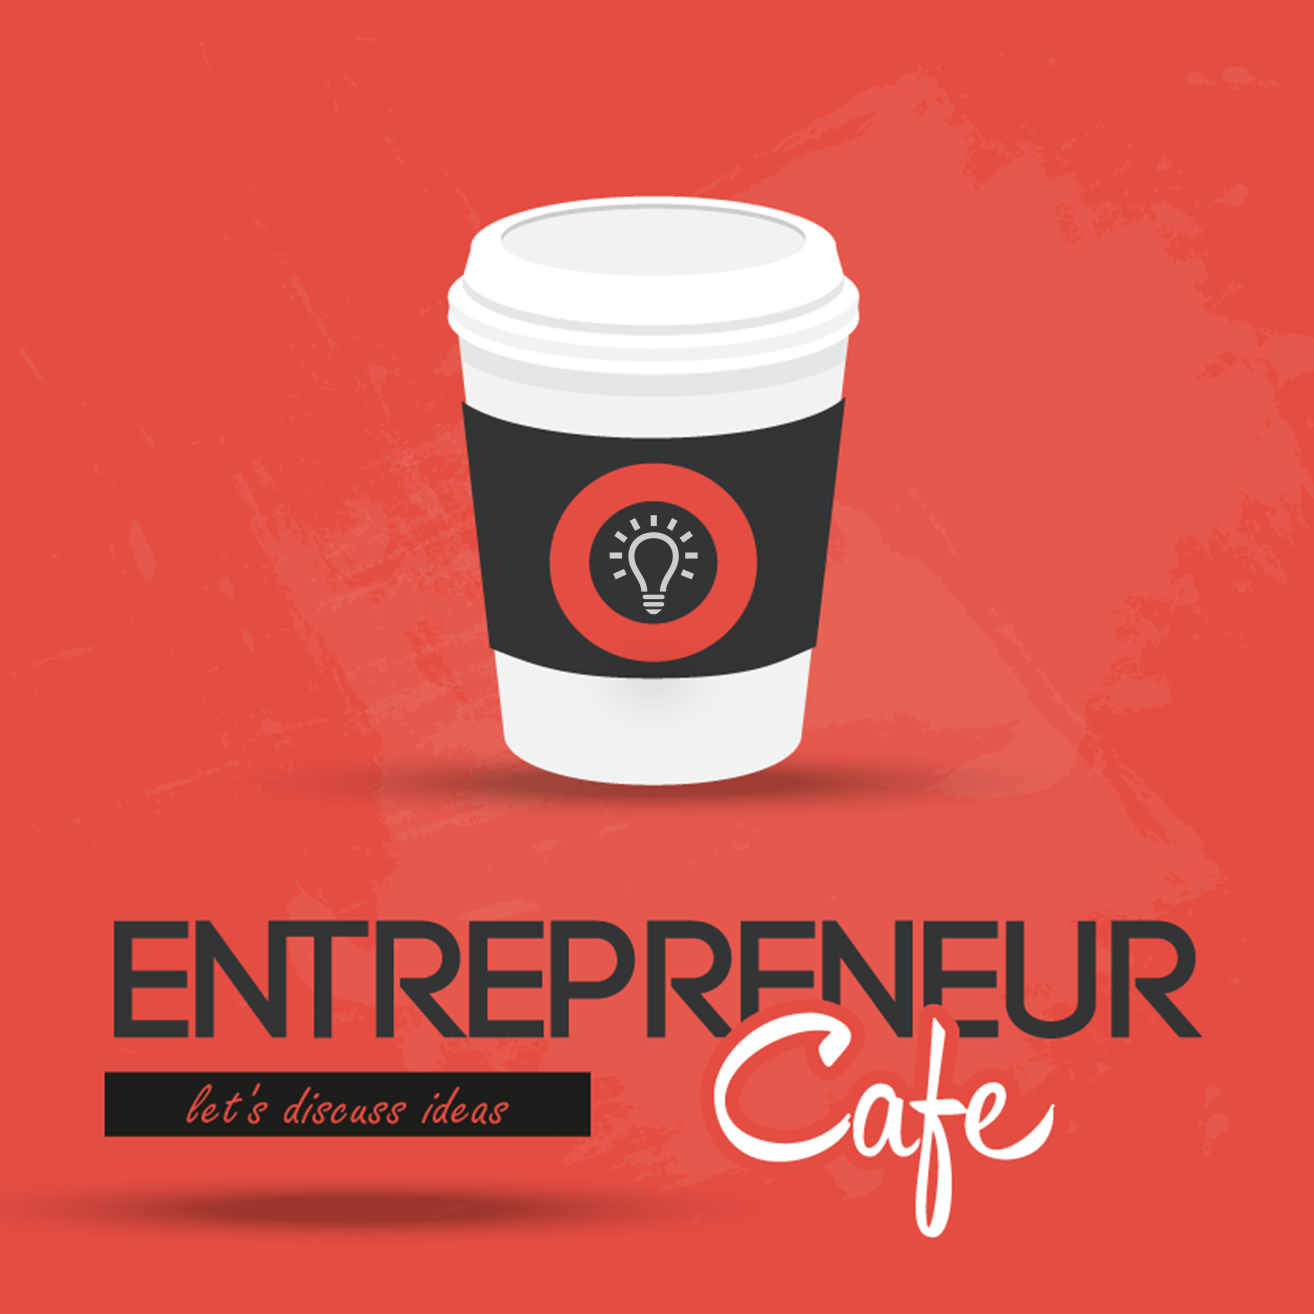 Entrepreneur Cafe